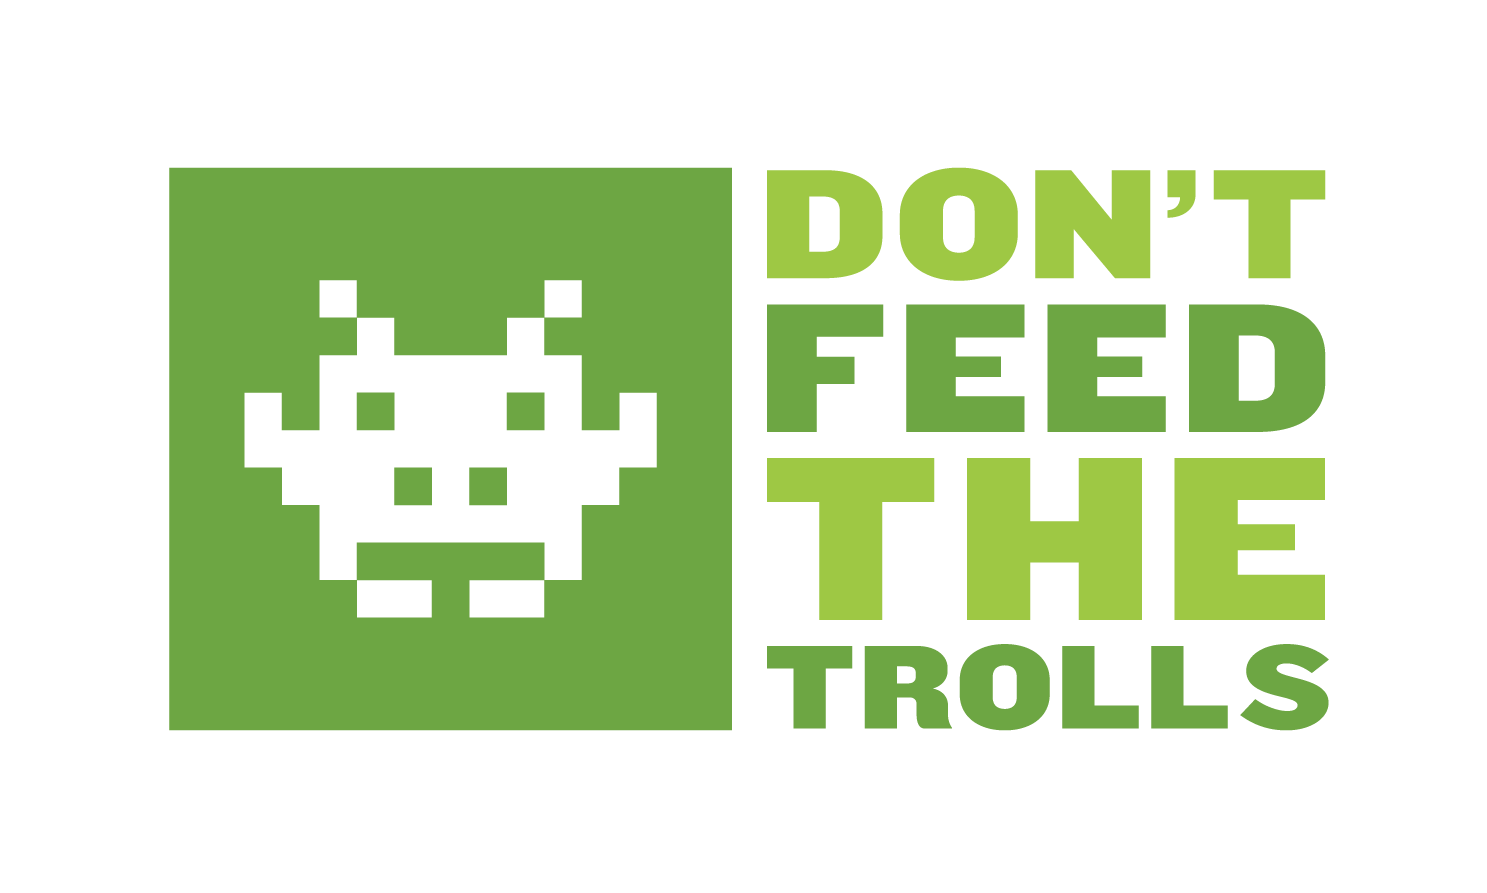 Don't feed the trolls!